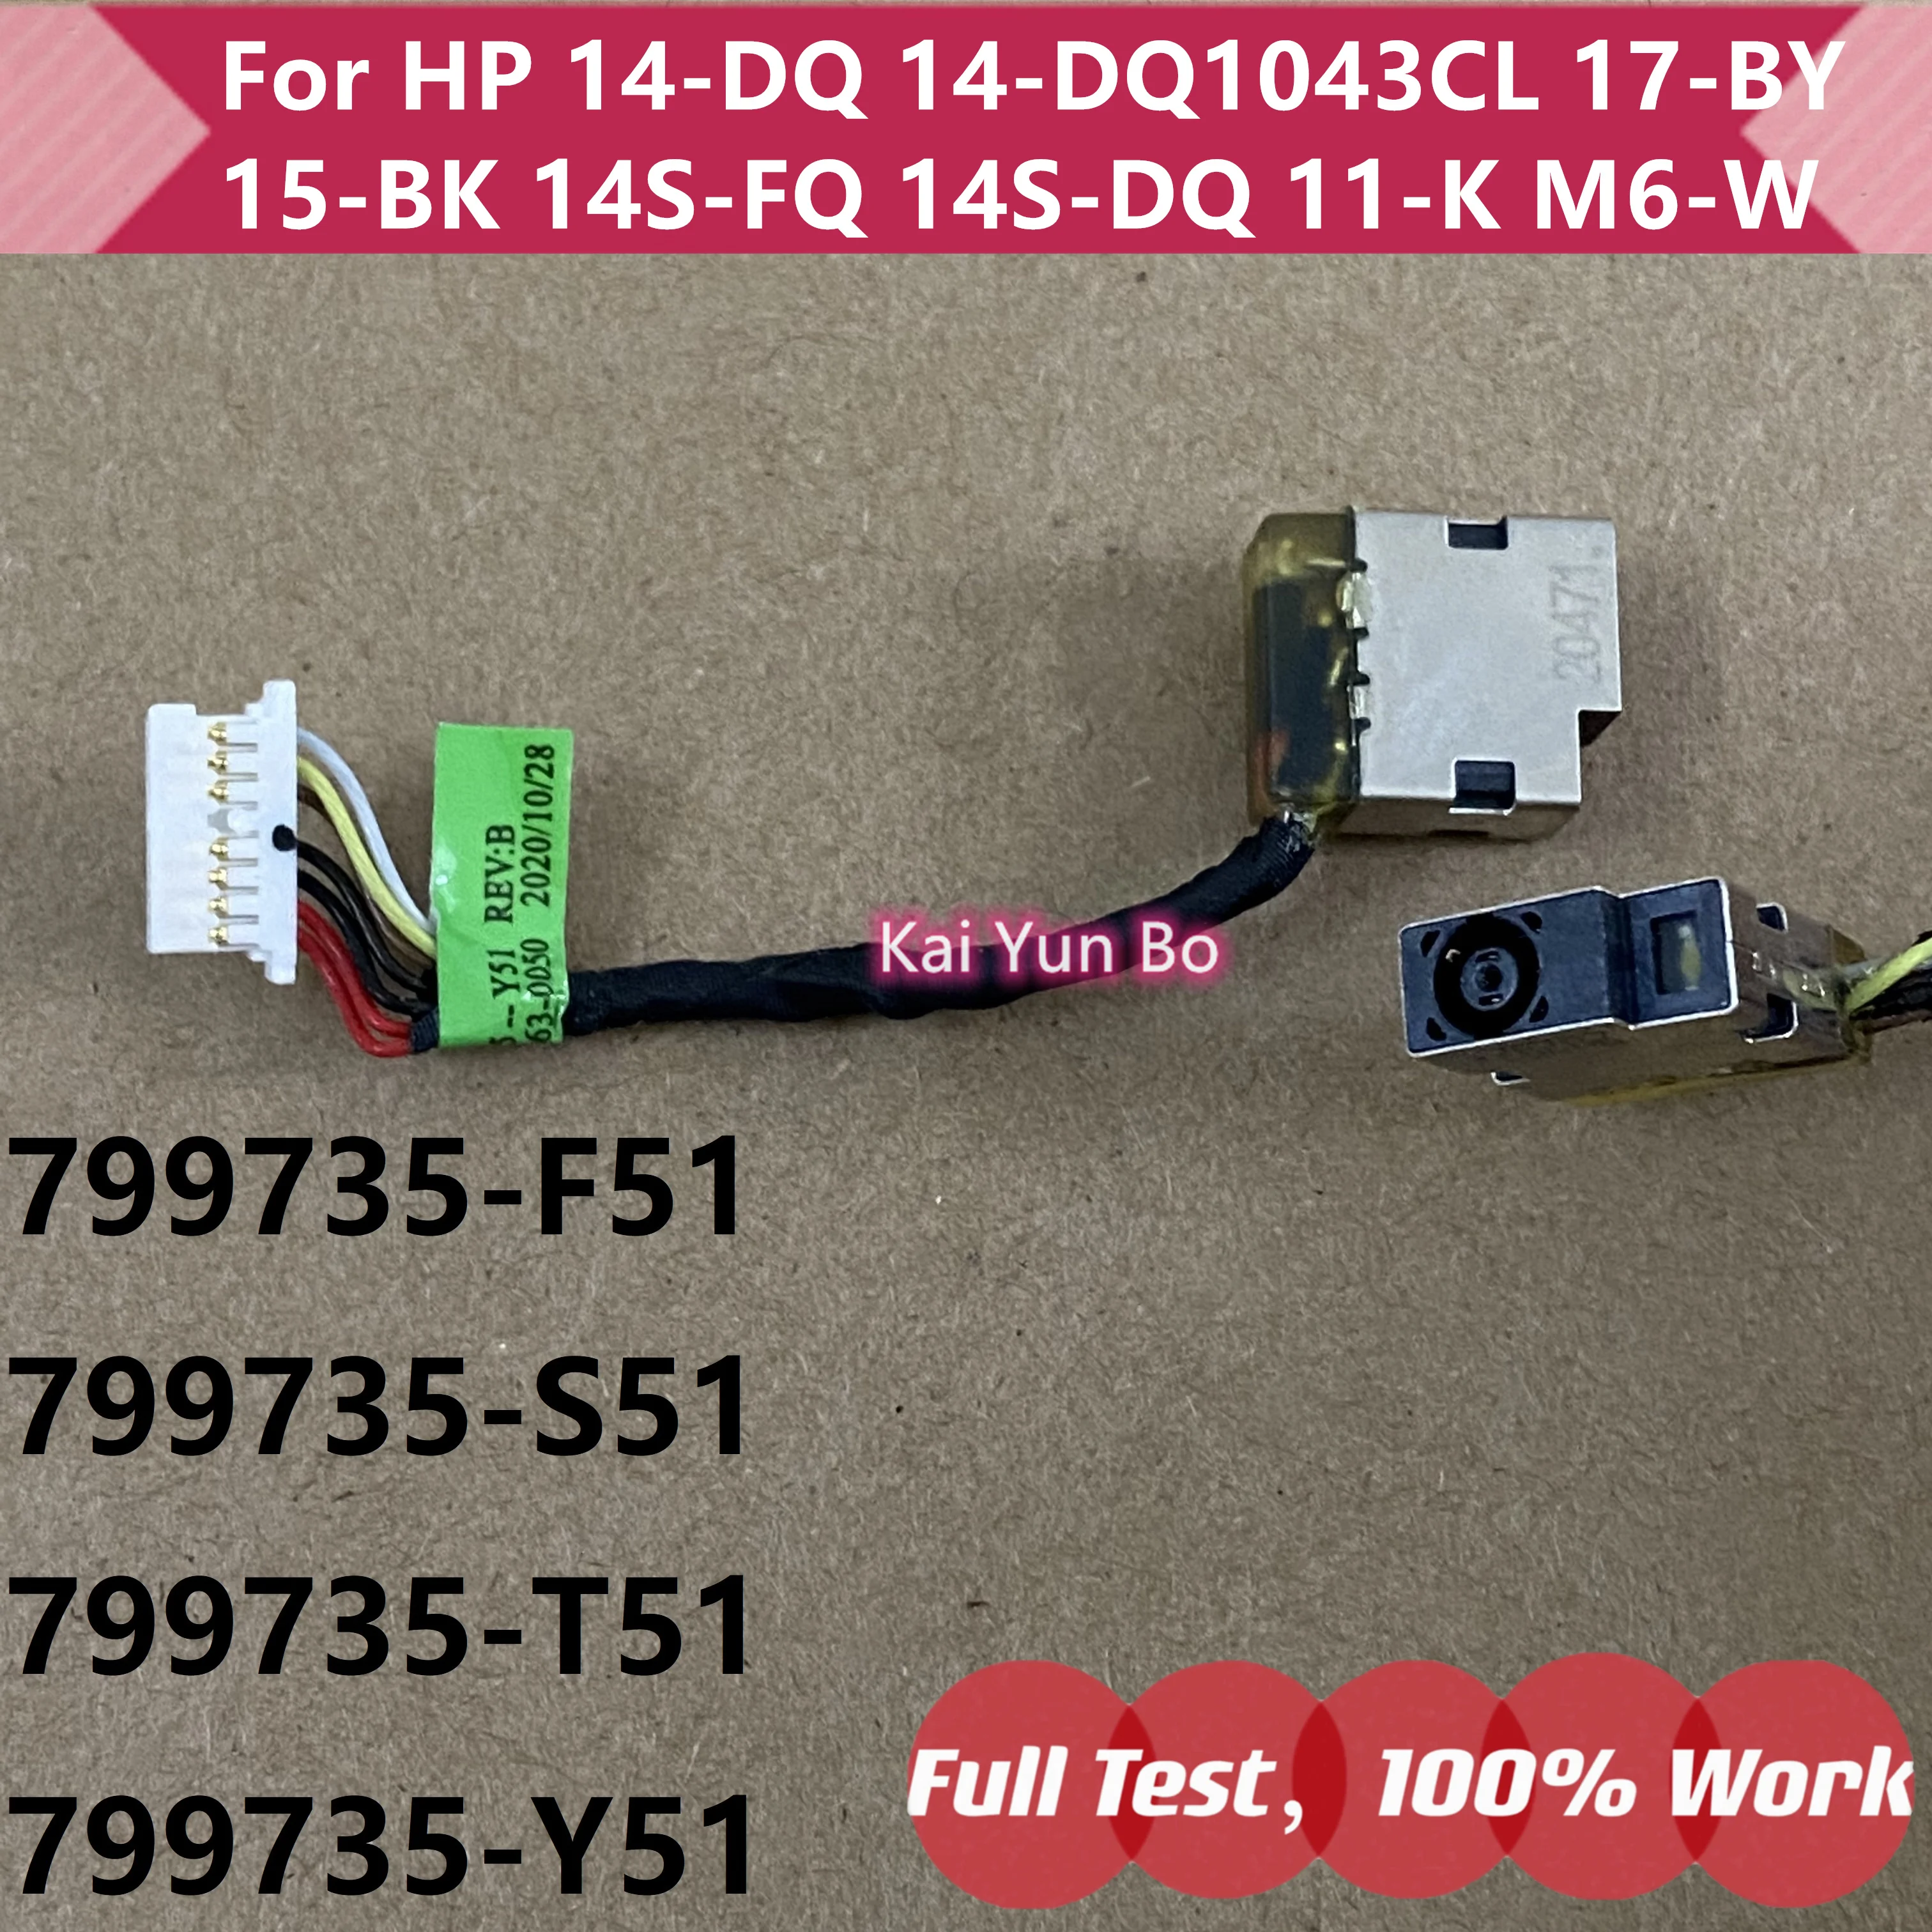 Кабель для зарядки с разъемом питания постоянного тока для HP 14-DQ 14-DQ1043CL 17-BY 15m-bp011dx 15M-BQ 15M-BQ021DX15-BK 14S-FQ 14S-DQ 11-K M6-W